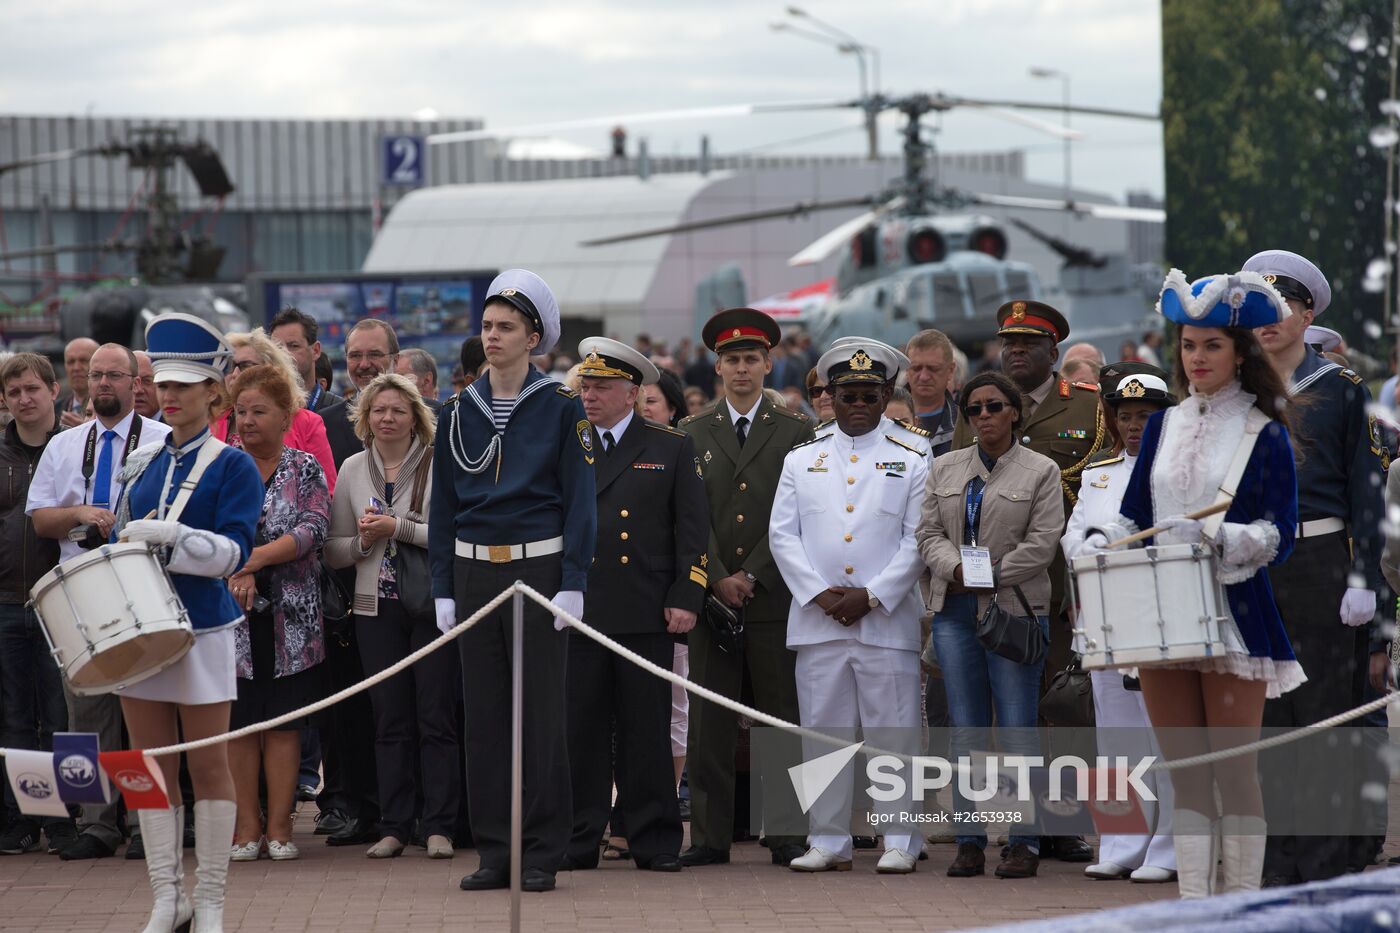 Opening of 2015 International Maritime Defense Show